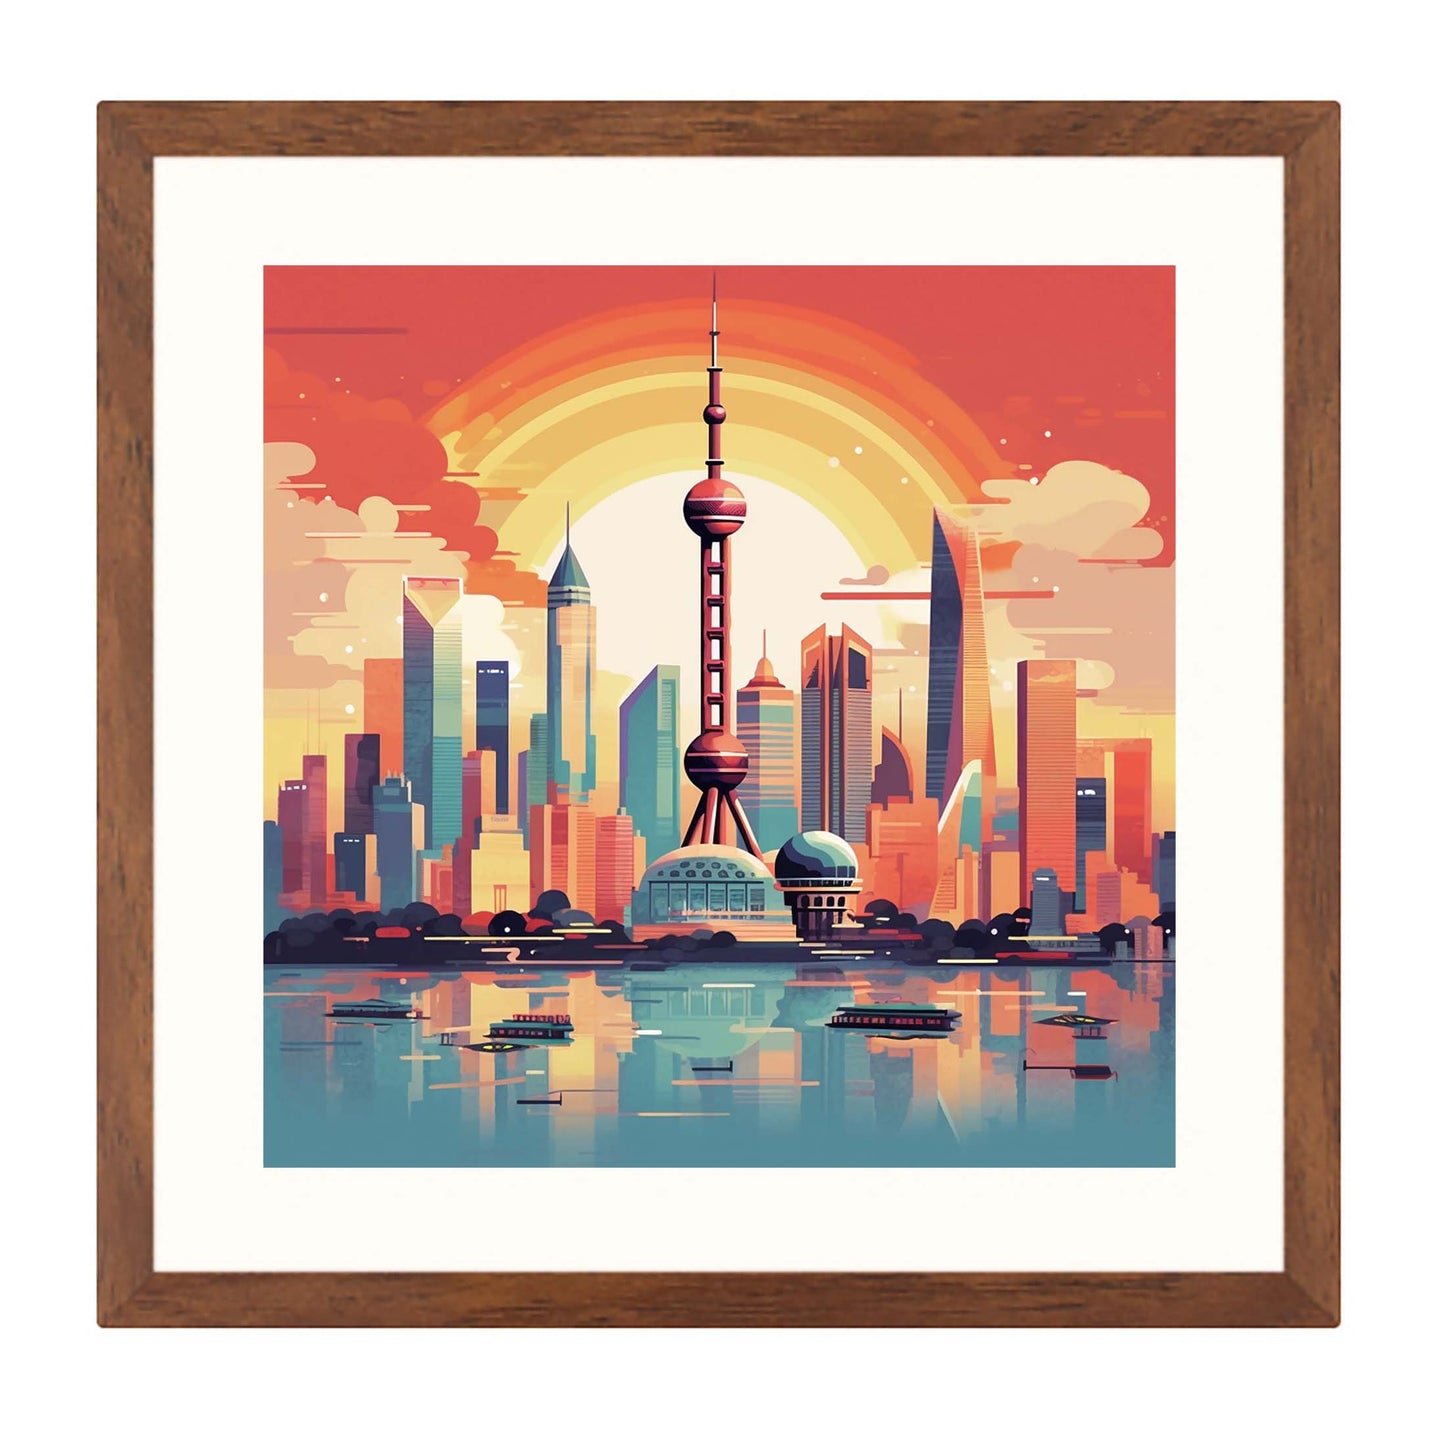 Shanghai Skyline mural in the style of minimalism